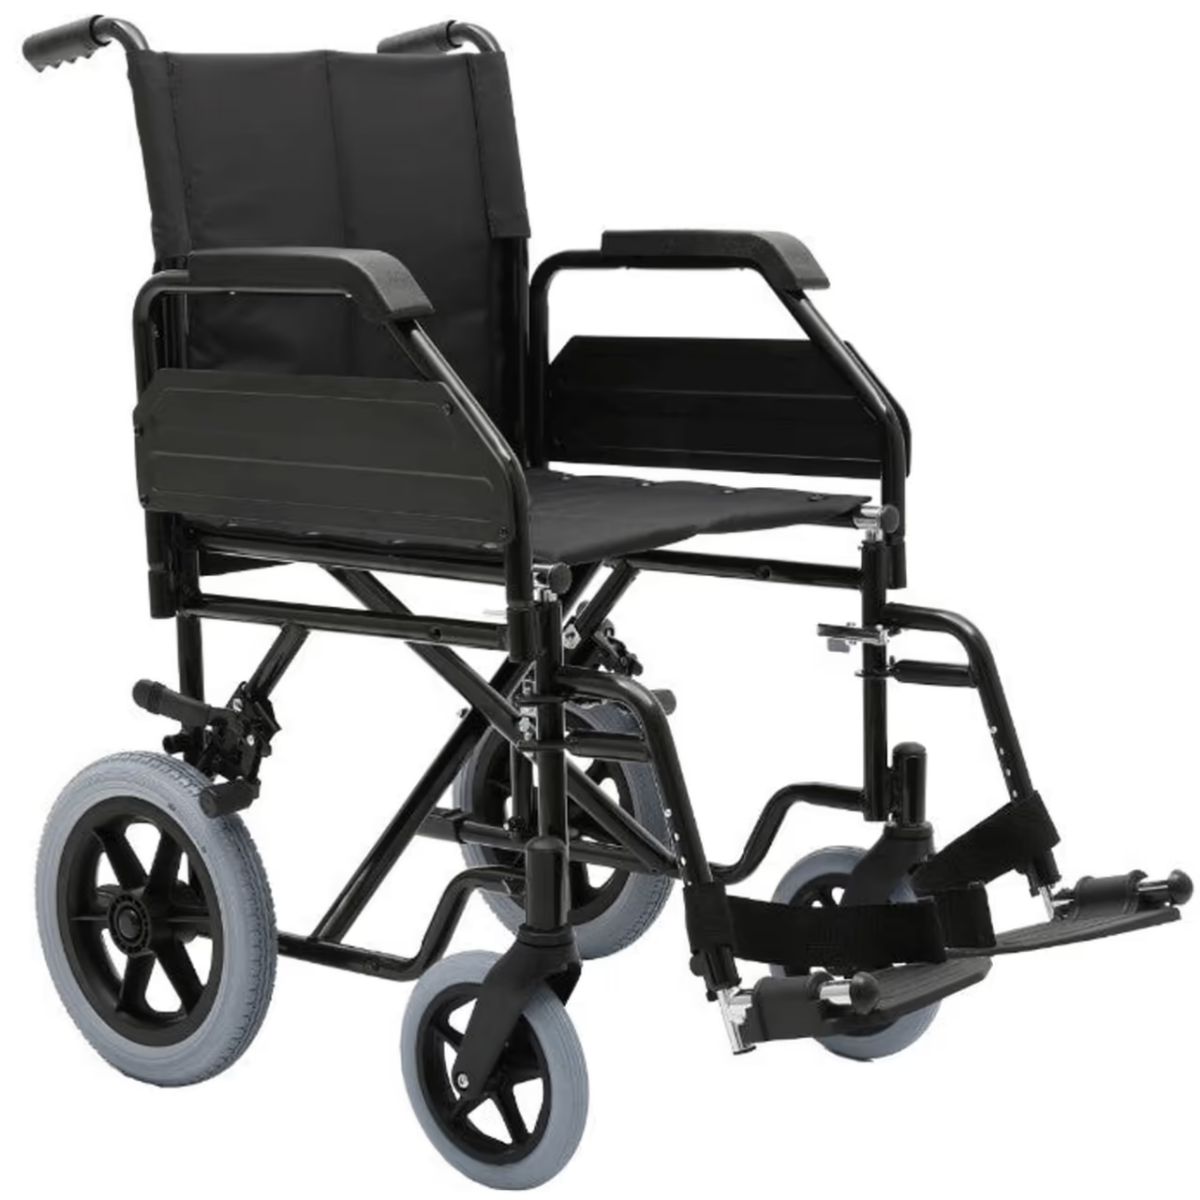 Folding transit wheelchair